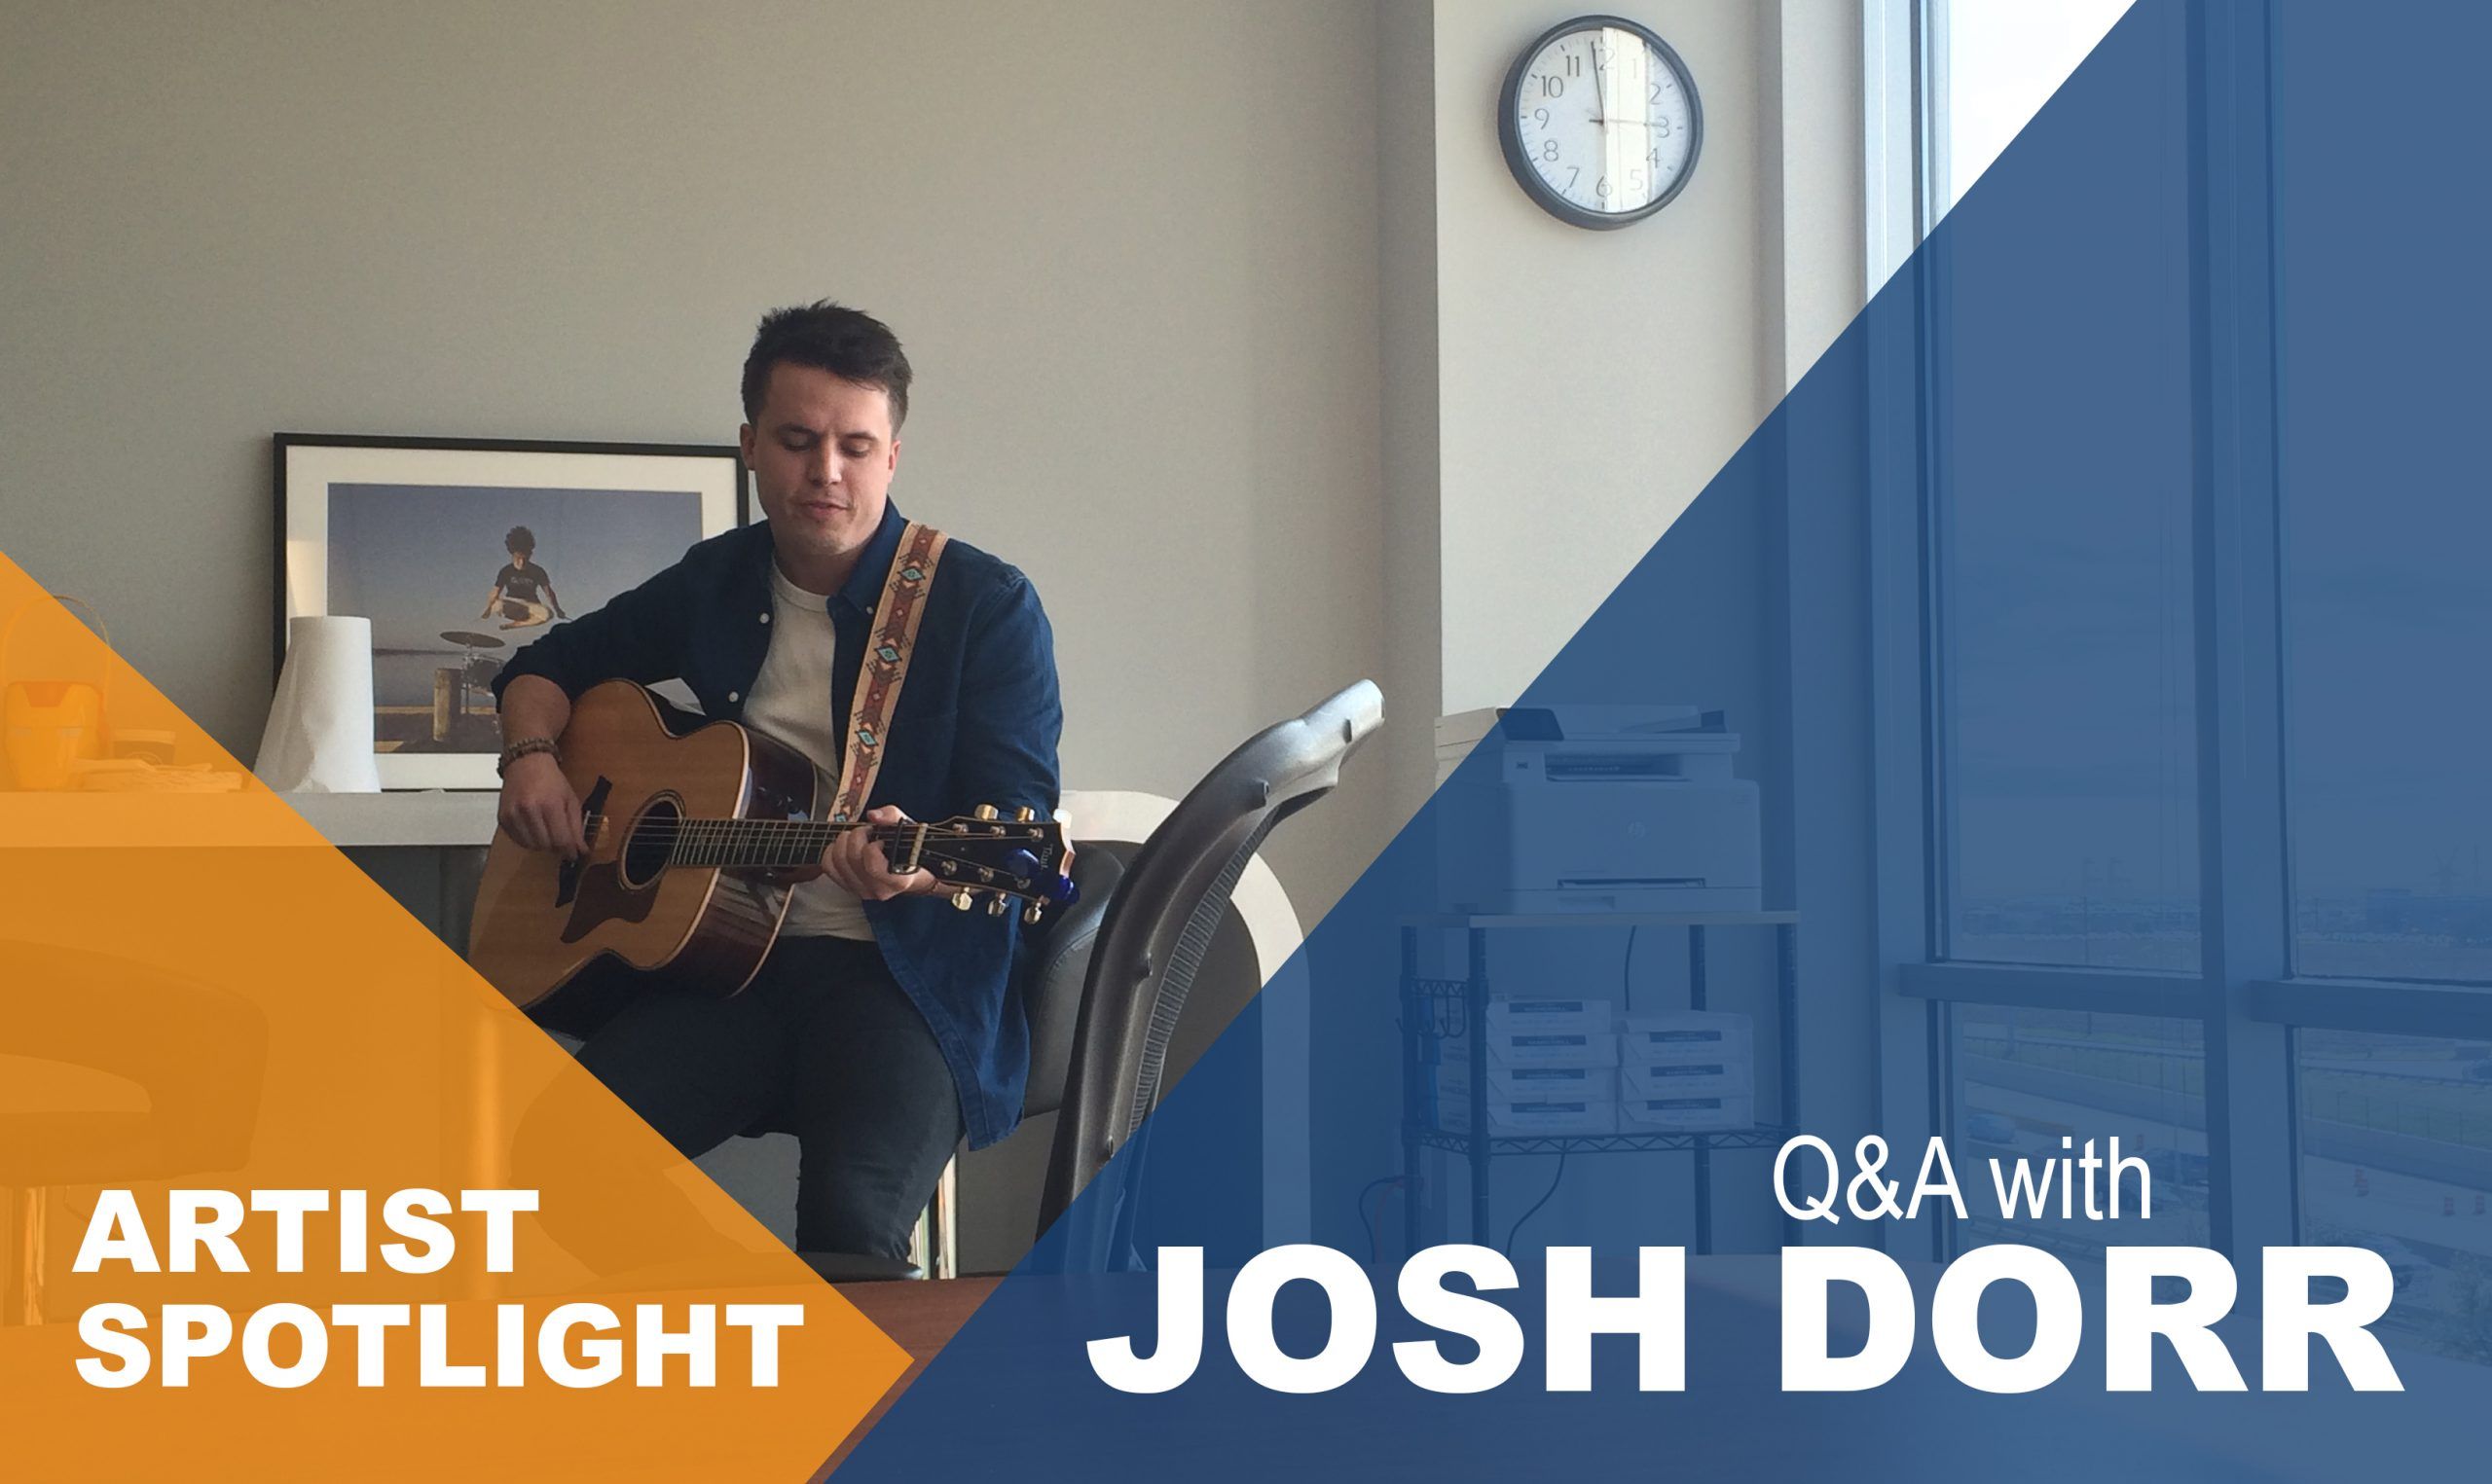 Artist Spotlight: Q&A with Josh Dorr